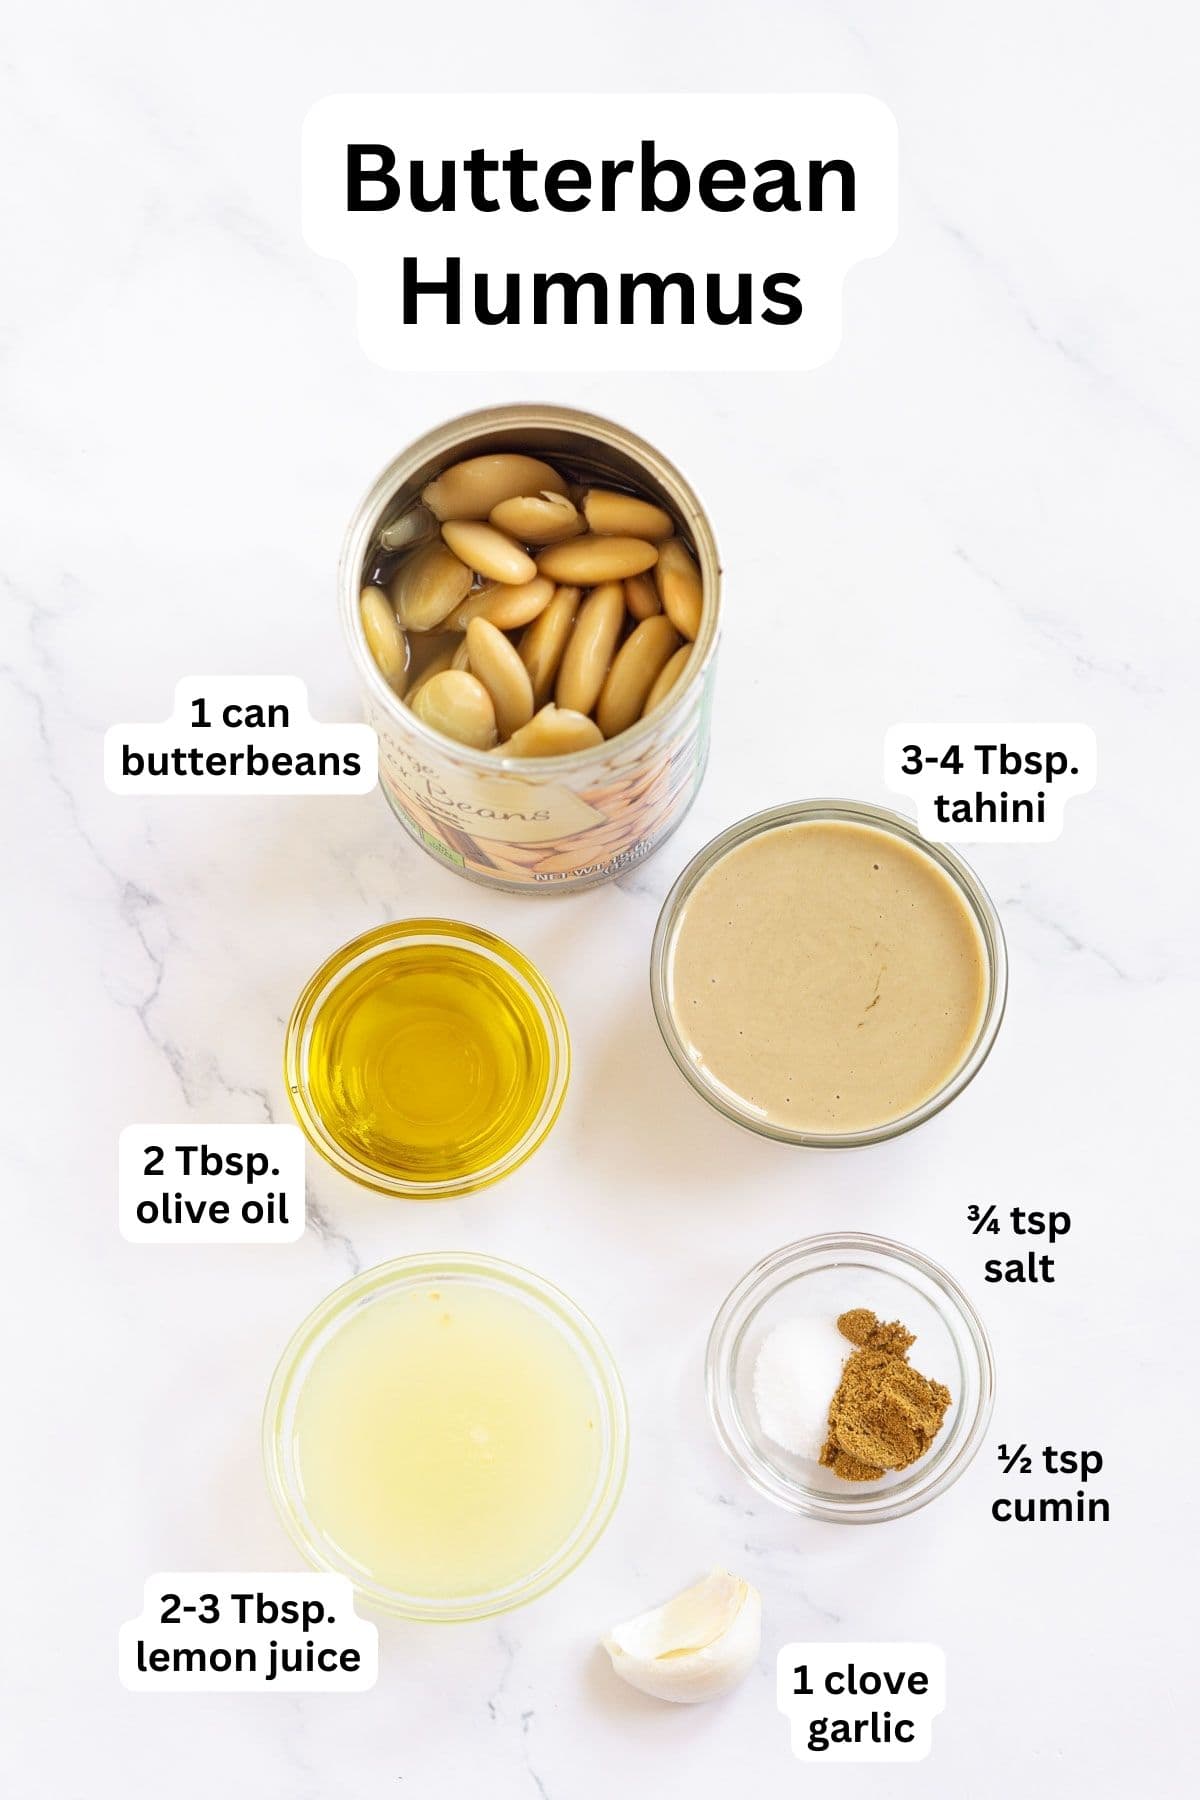 Butterbean Hummus ingredients